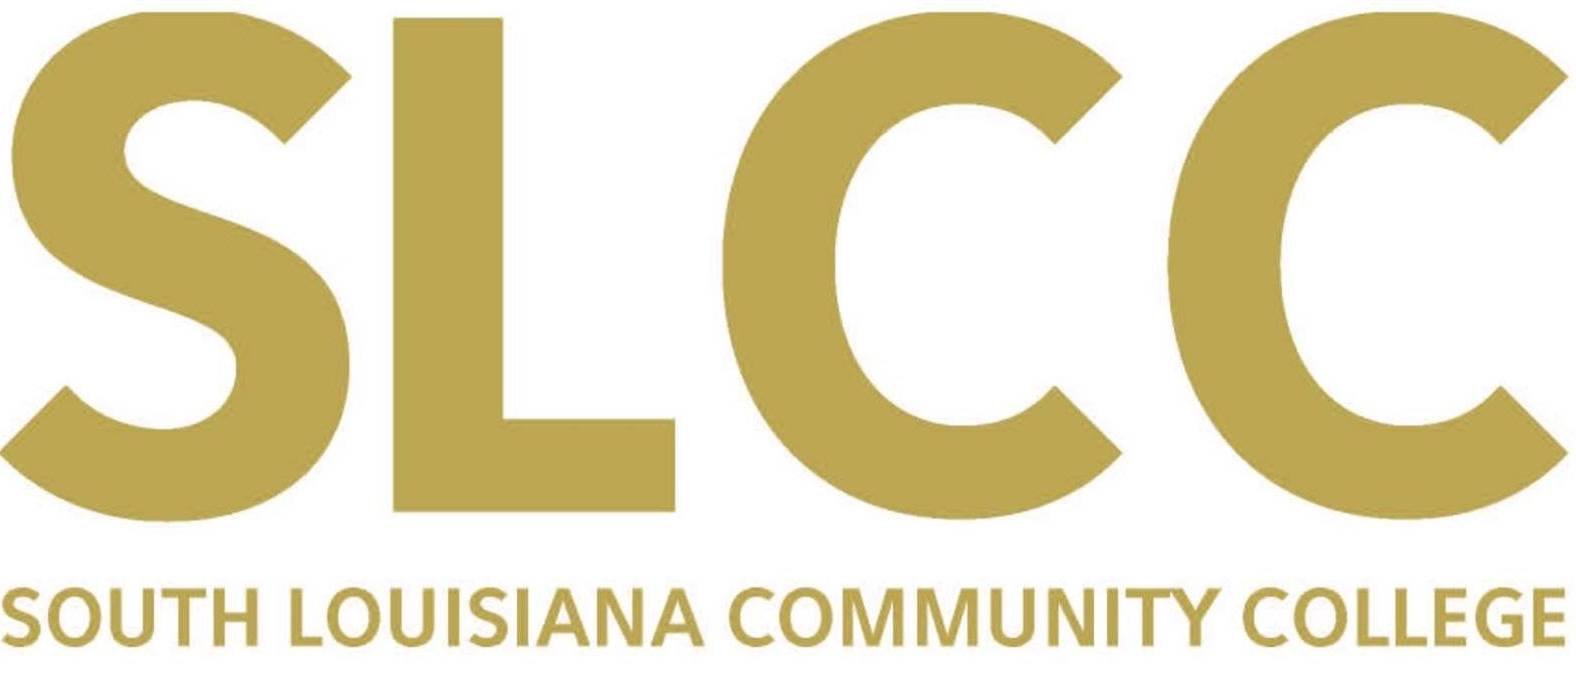 slcc-logo